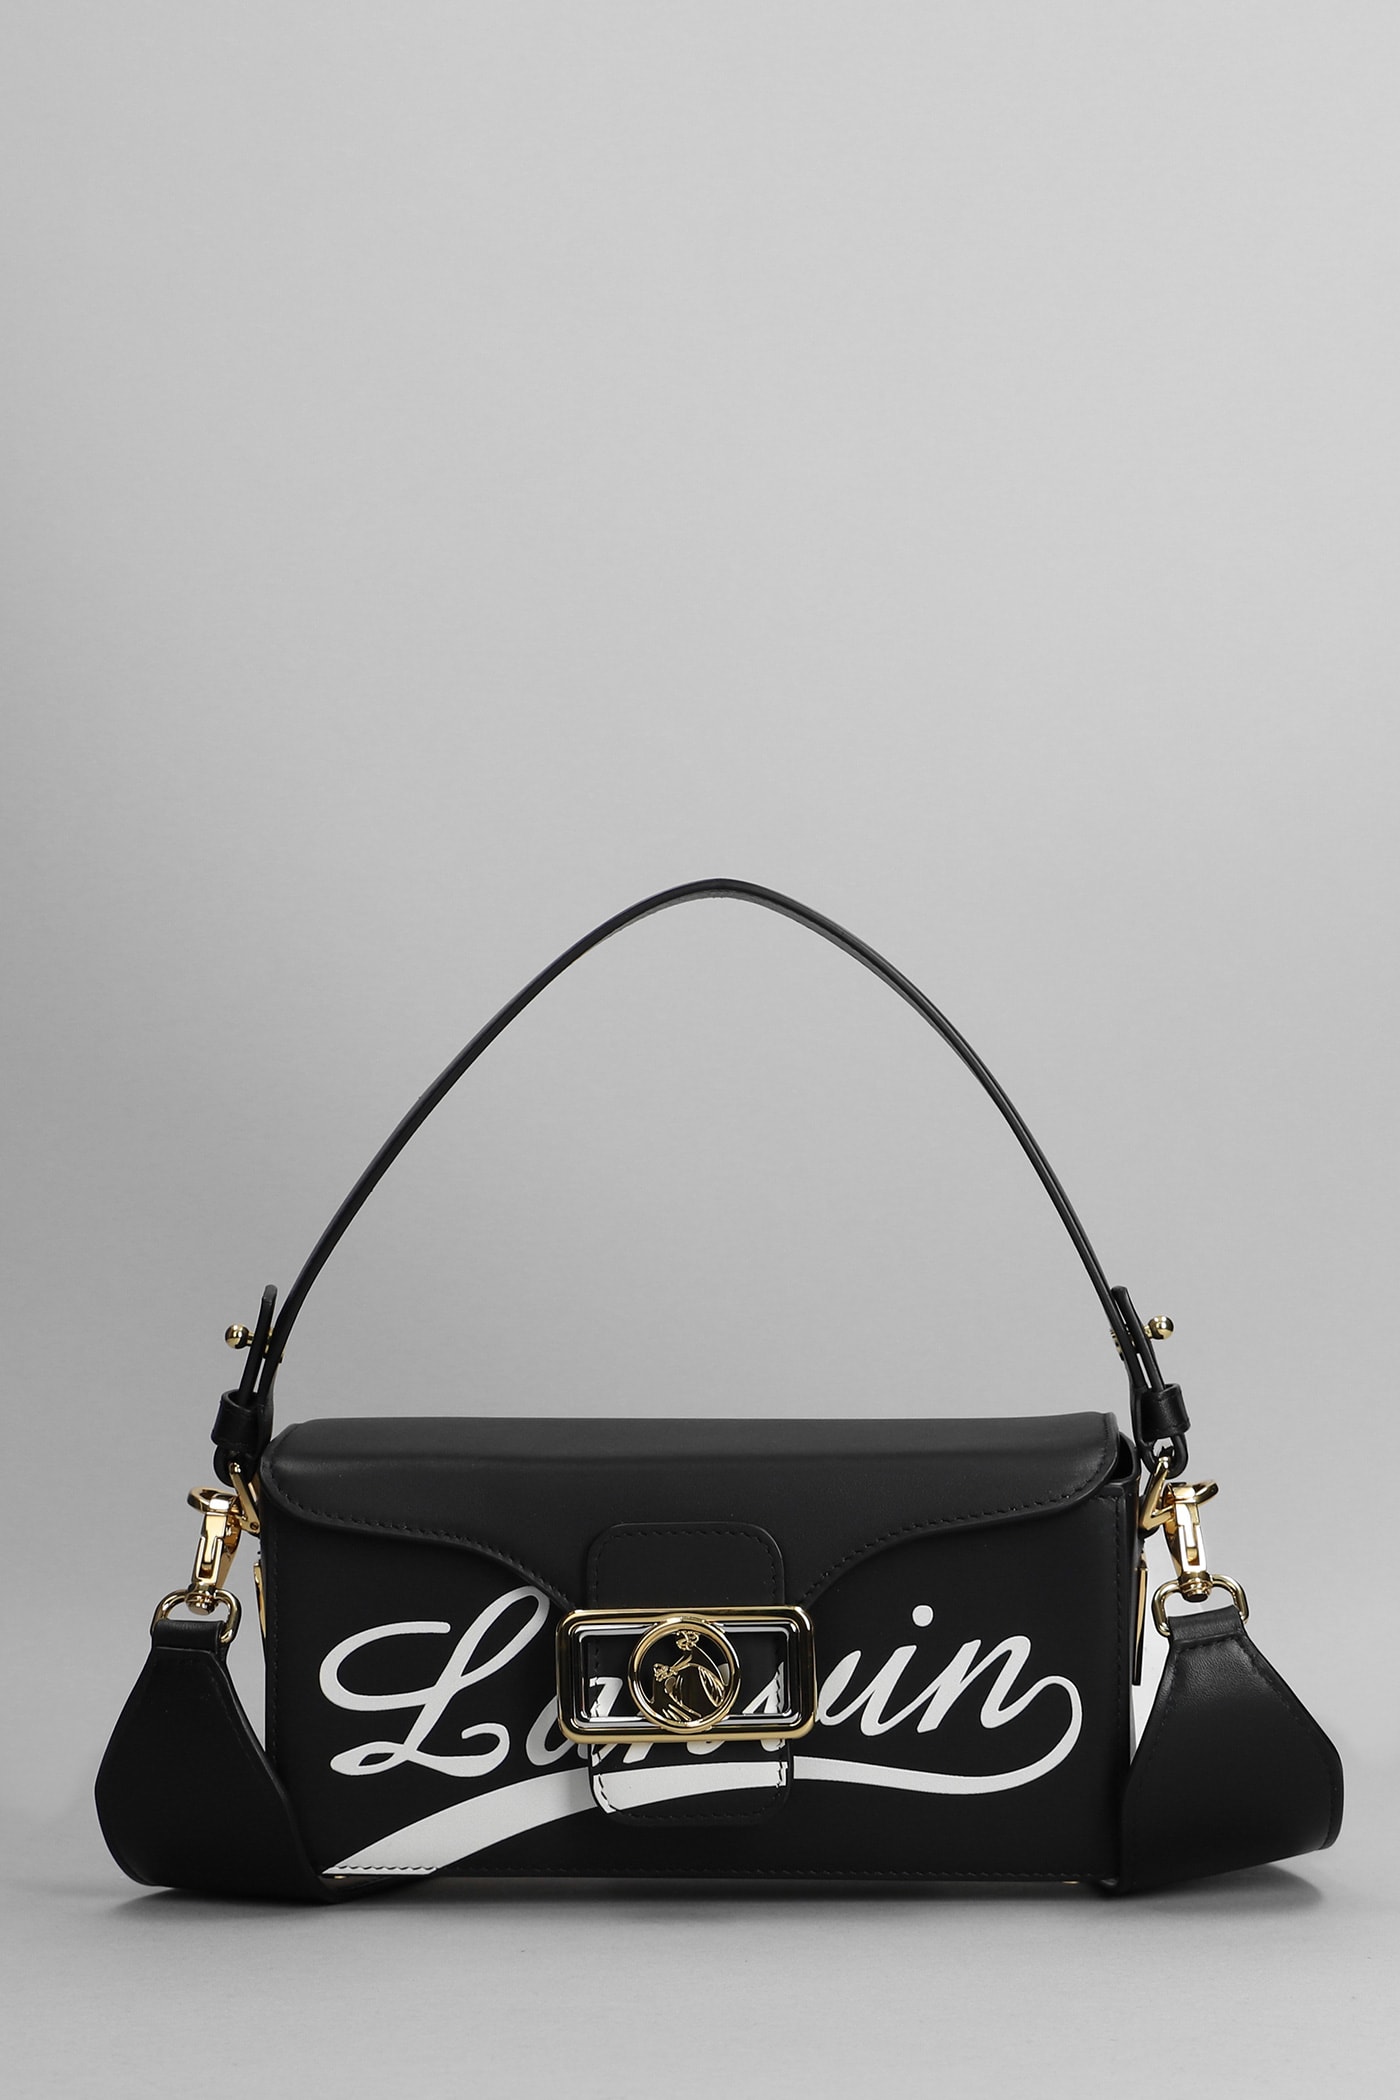 Lanvin Hand Bag In Black Leather